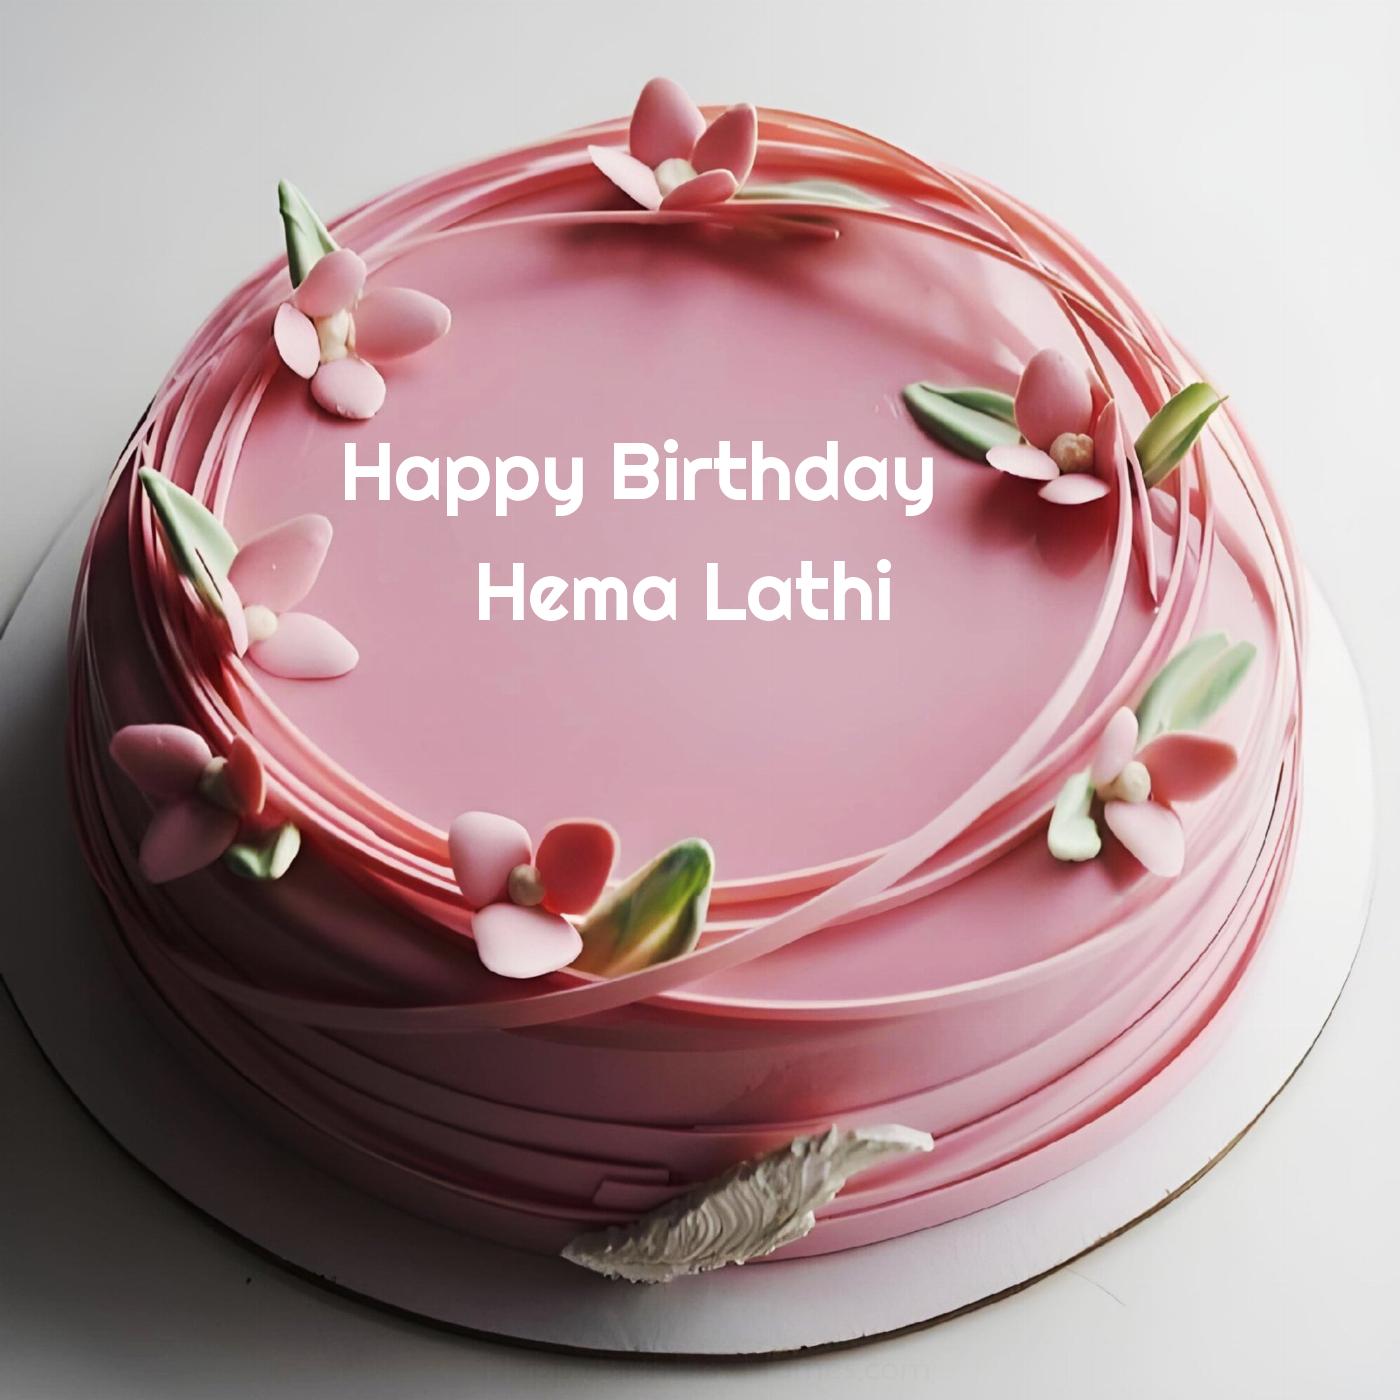 Happy Birthday Hema Lathi Pink Flowers Cake